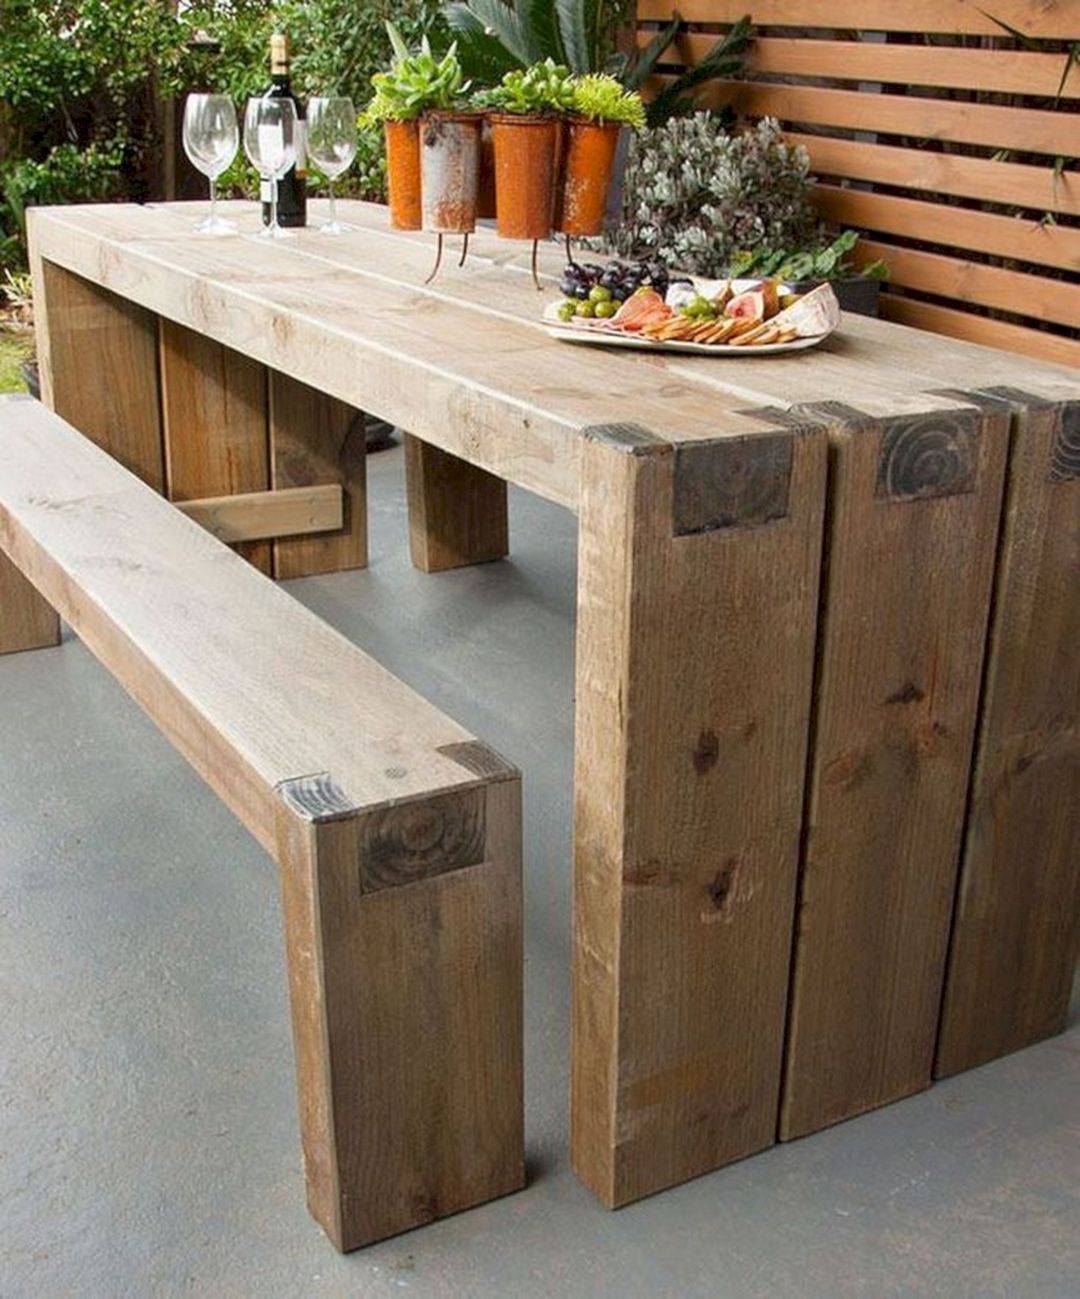 18 Wonderful DIY Backyard Outdoor Table Ideas For Summer Season - 18 Wonderful DIY Backyard Outdoor Table Ideas For Summer Season -   18 diy Table outdoor ideas